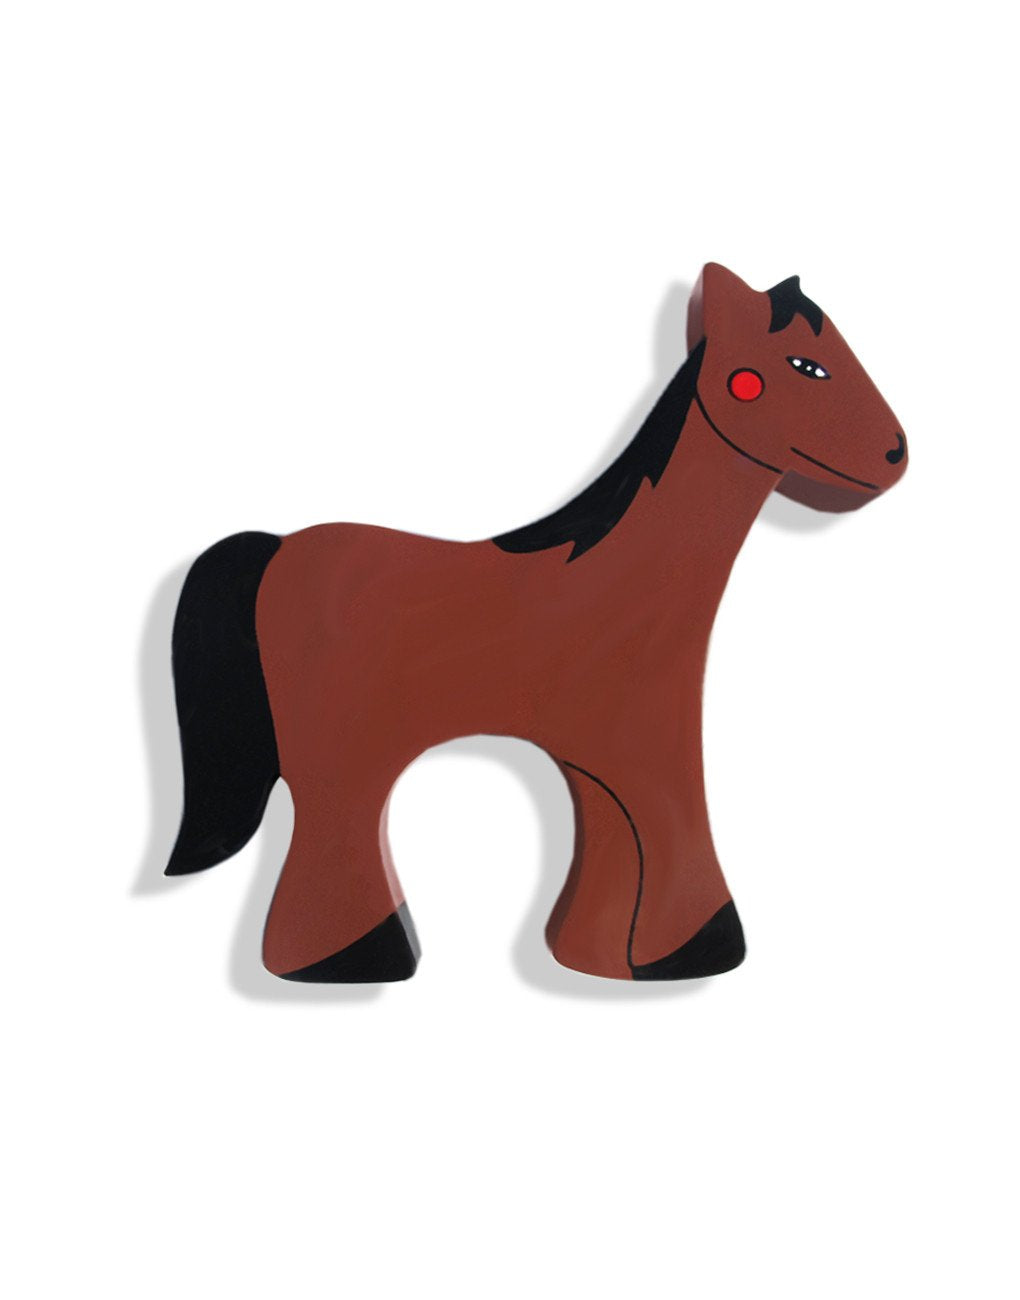 HORSE - Wooden Animal Magnet